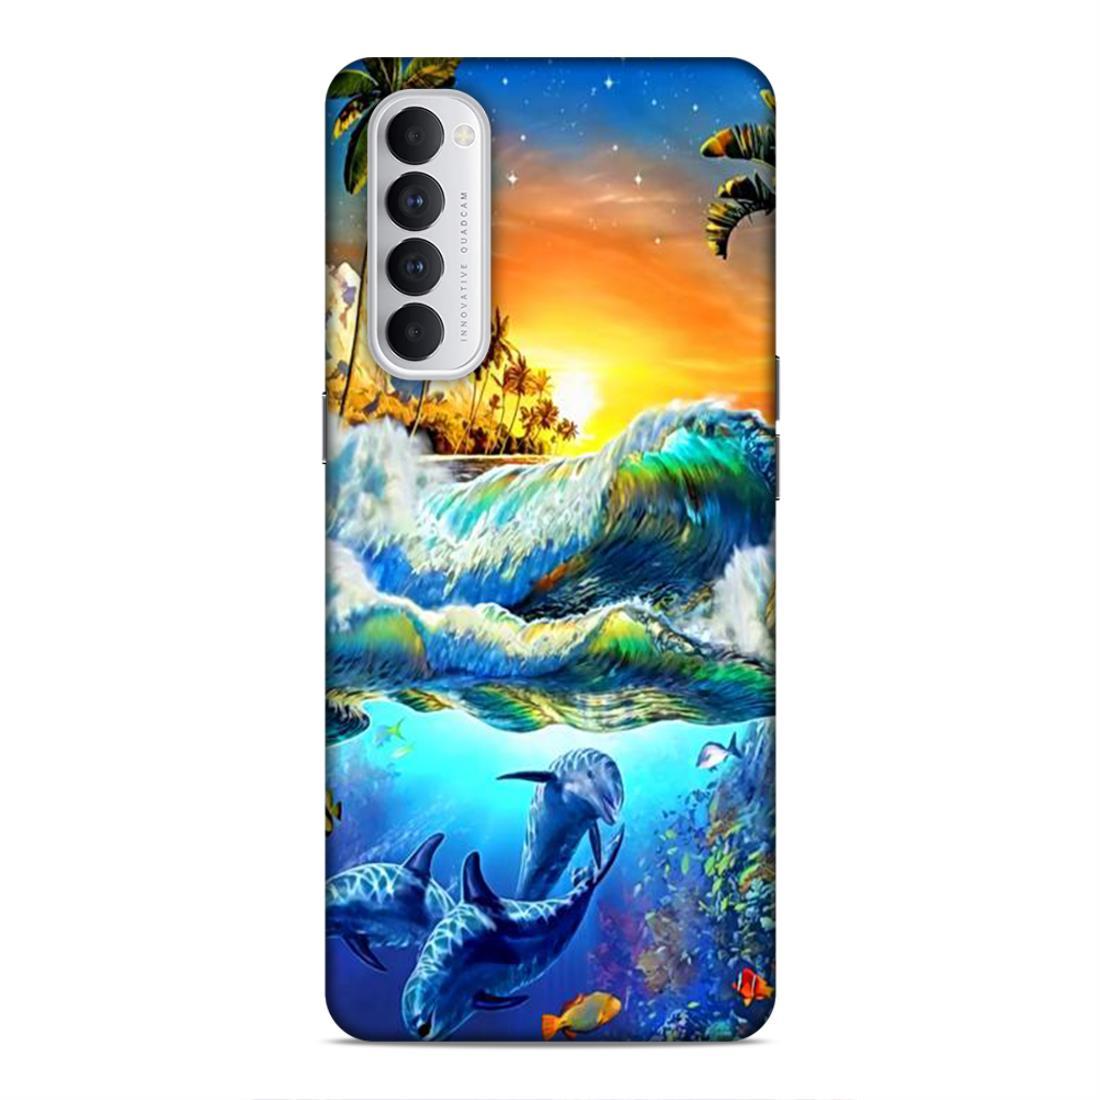 Sunrise Art Oppo Reno 4 Pro Phone Cover Case